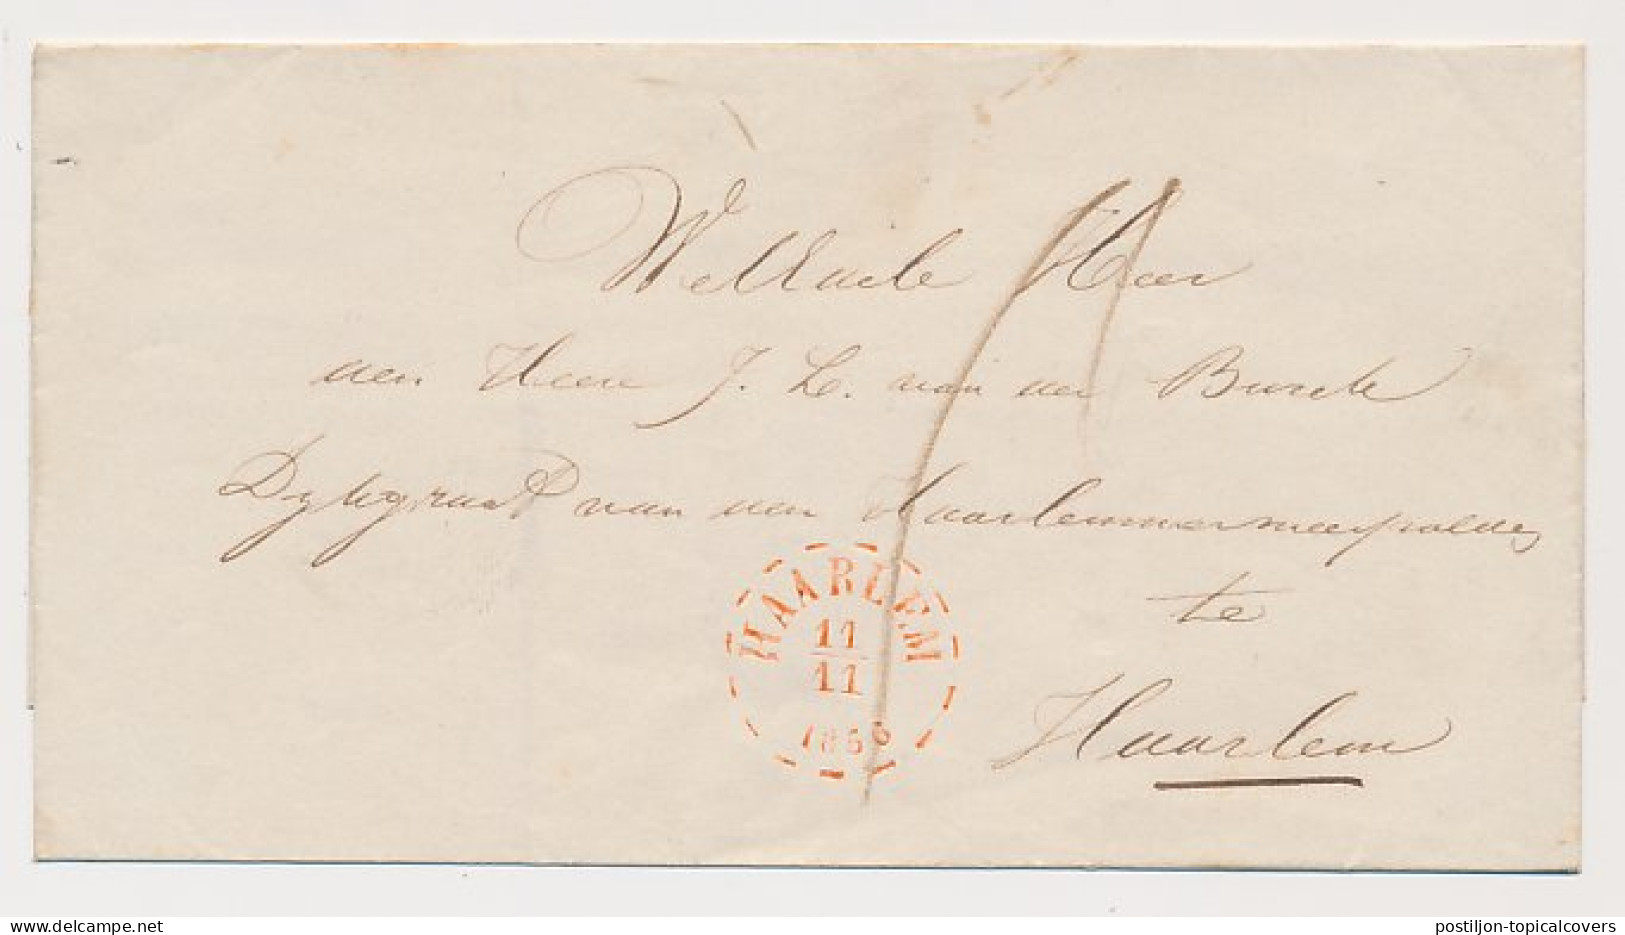 Houtryk Enz - Haarlem 1856 - Gebroken Ringstempel - Lettres & Documents